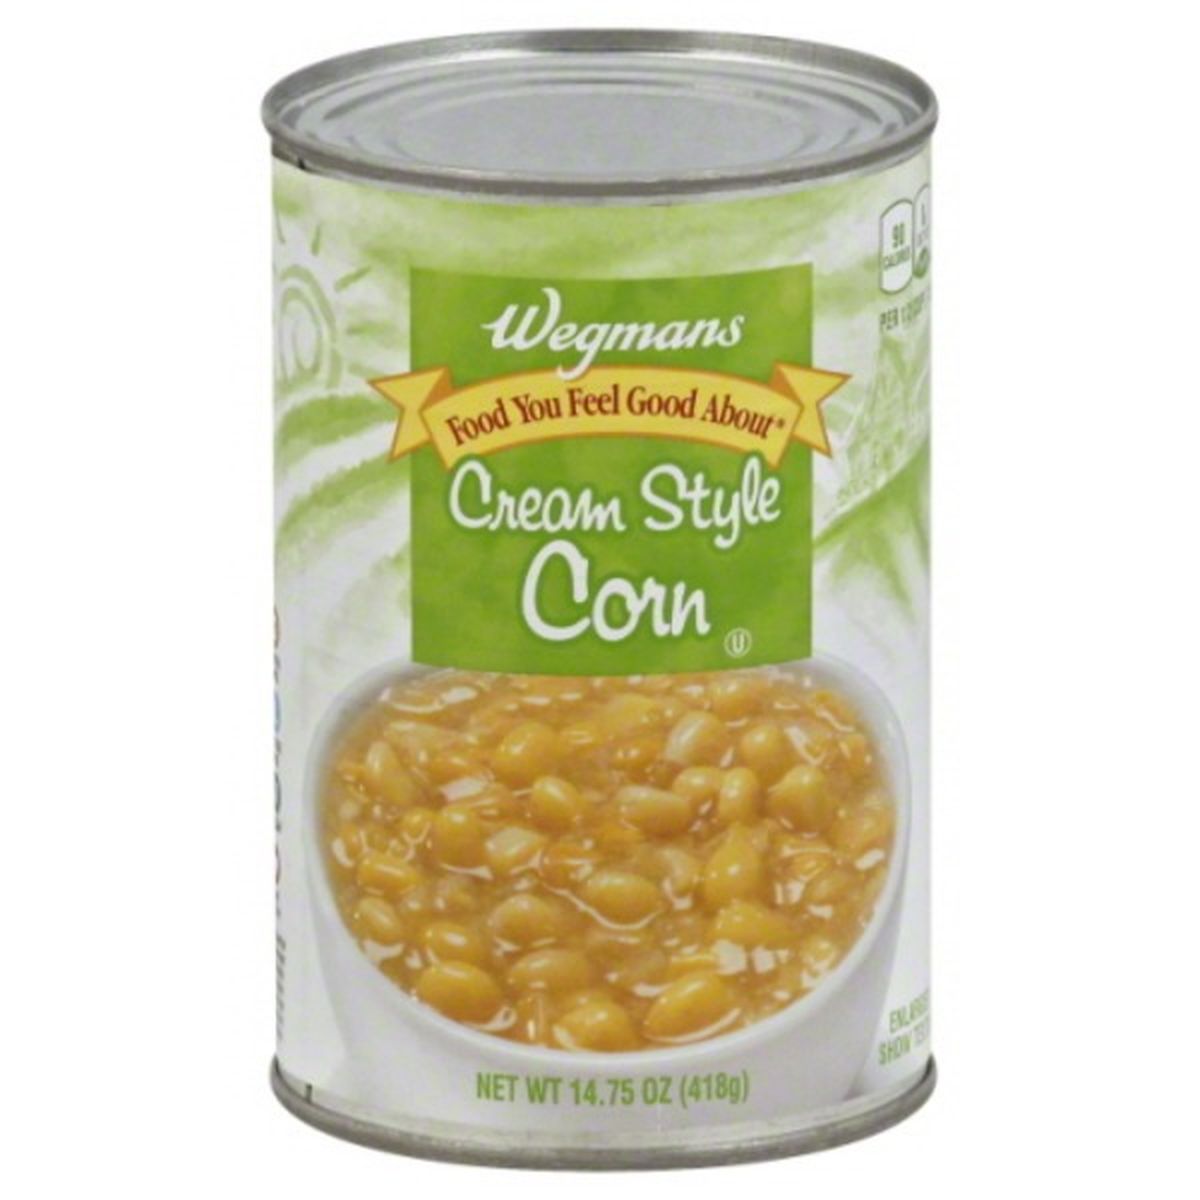 Calories in Wegmans Cream Style Corn